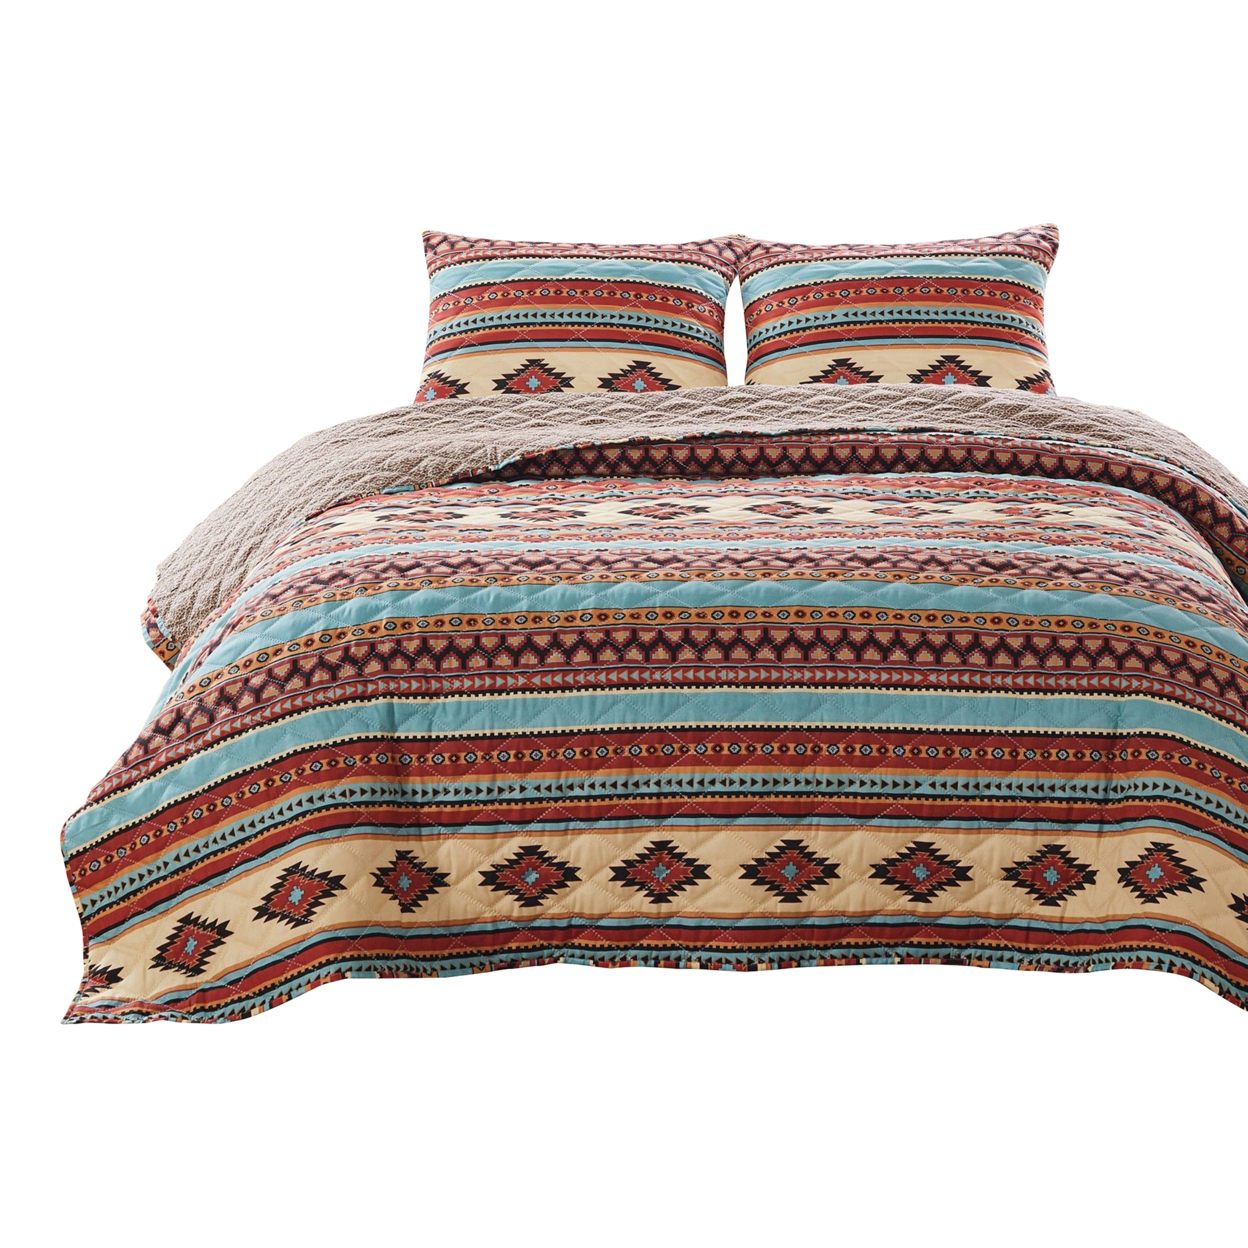 Linda 3 Piece King Quilt Set, Tribal Pattern, Diamond Design, Multicolor- Saltoro Sherpi